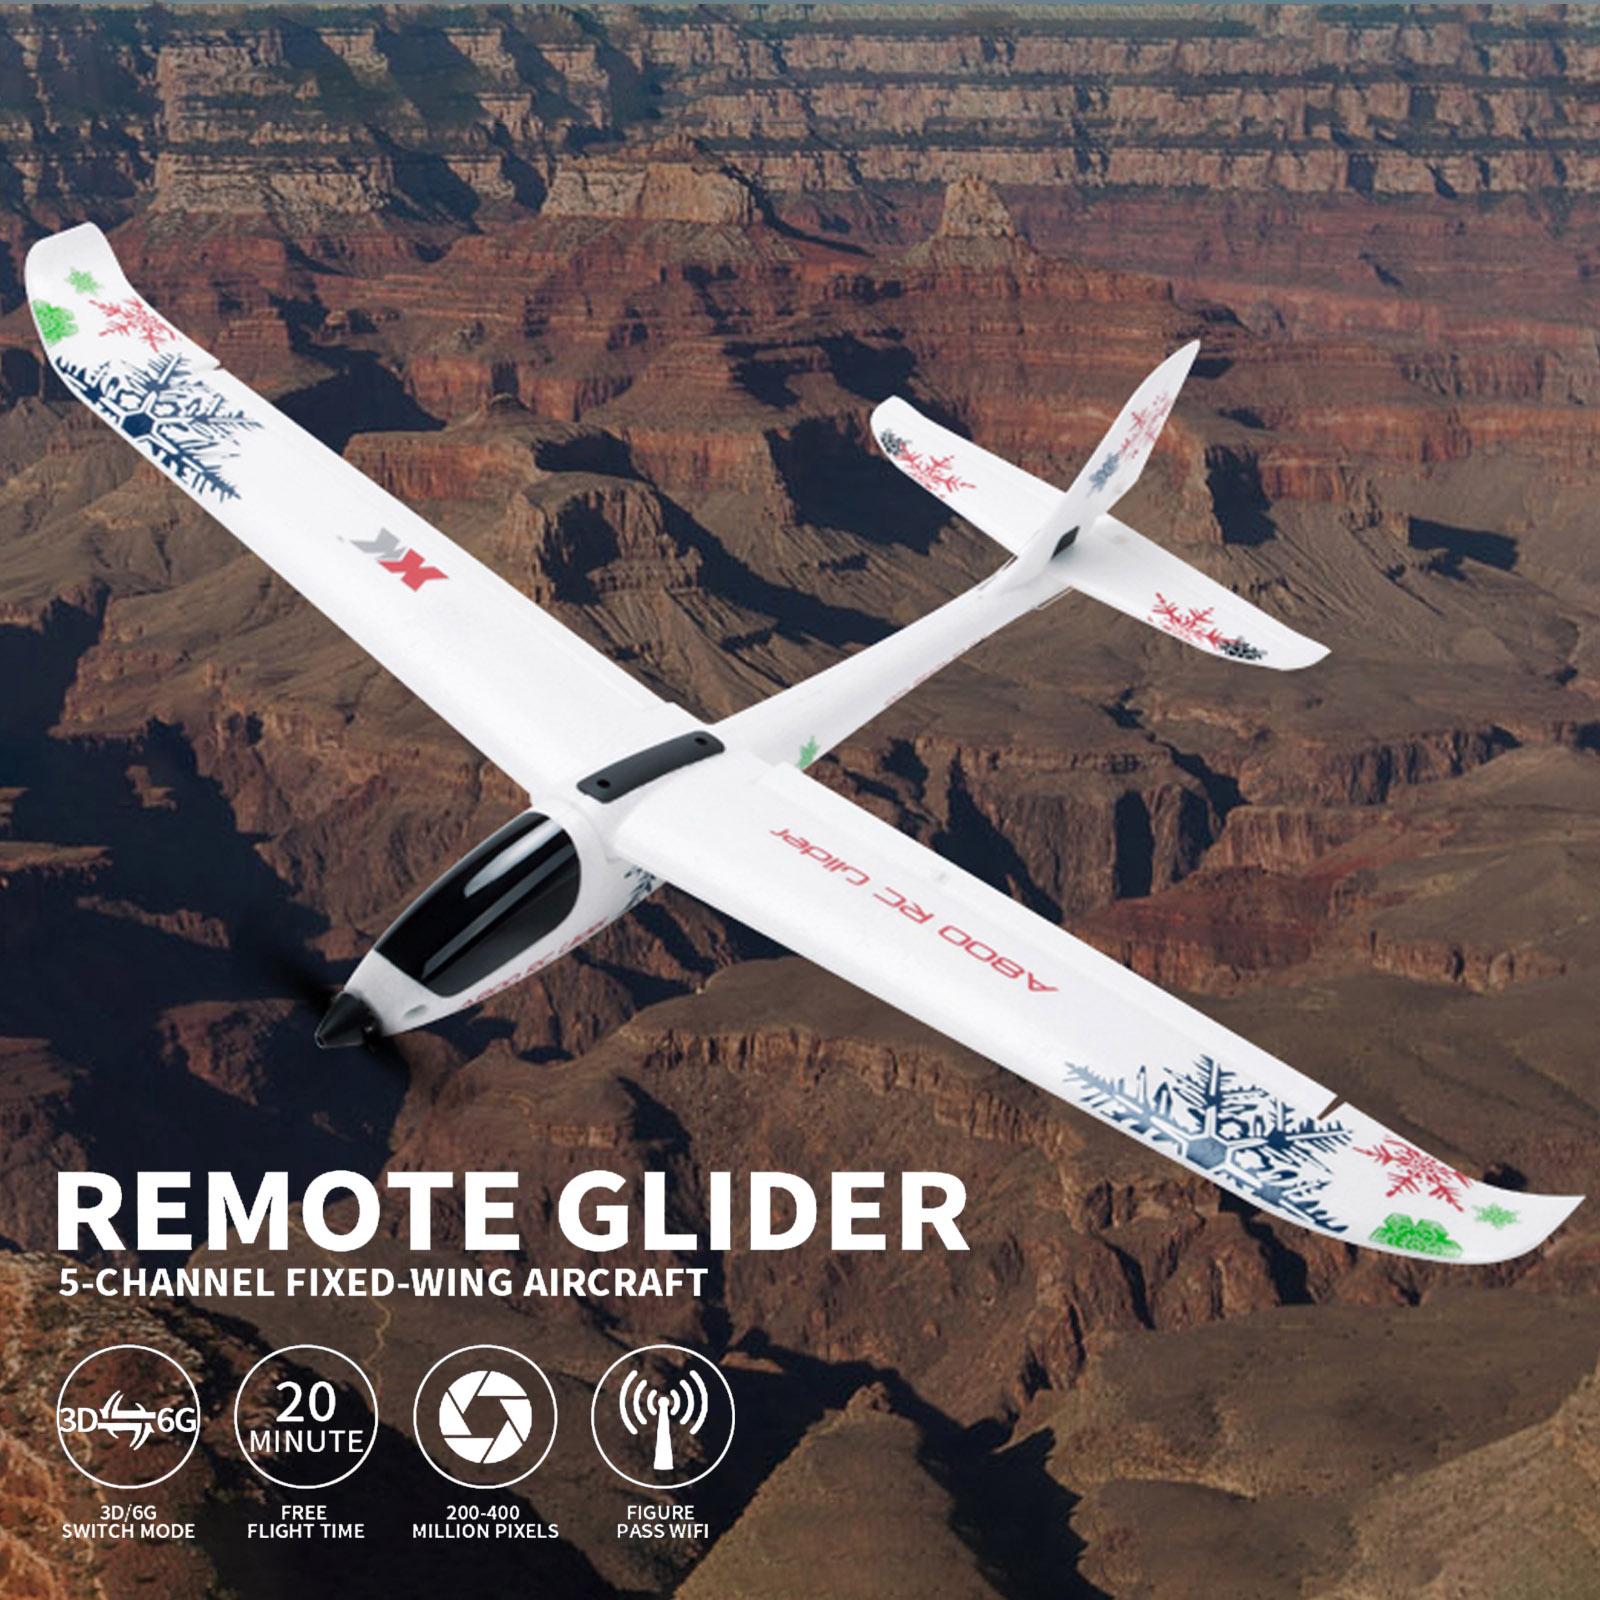 Xk A800 Rc Glider: Sleek Design & Impressive Performance: The XK A800 RC Glider